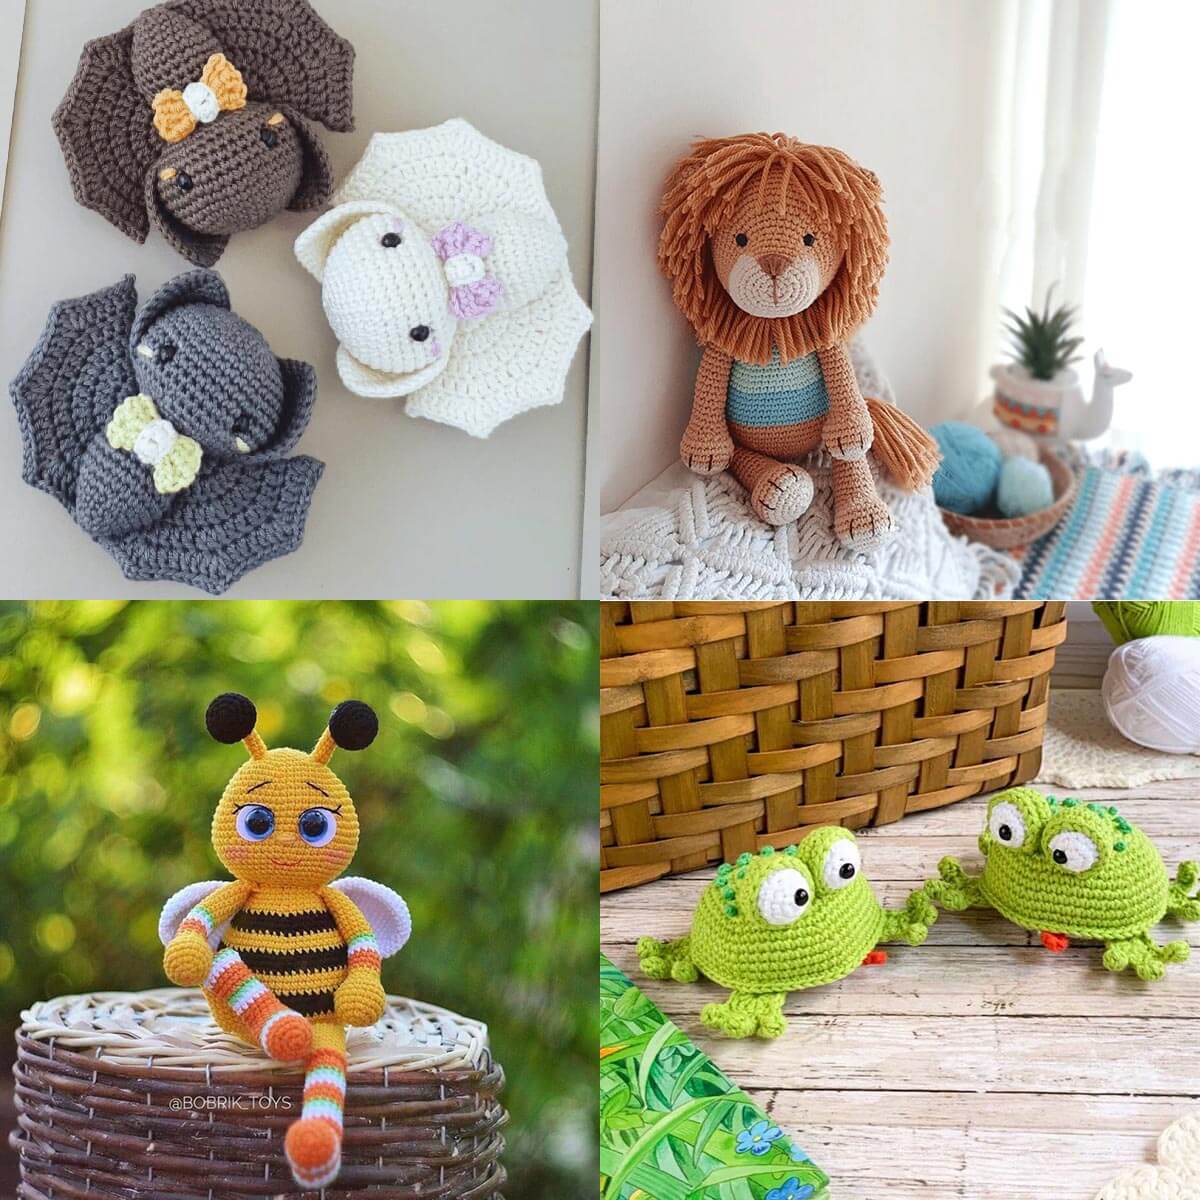 35+ Adorable Crochet Animal Patterns - Adventures of a DIY Mom